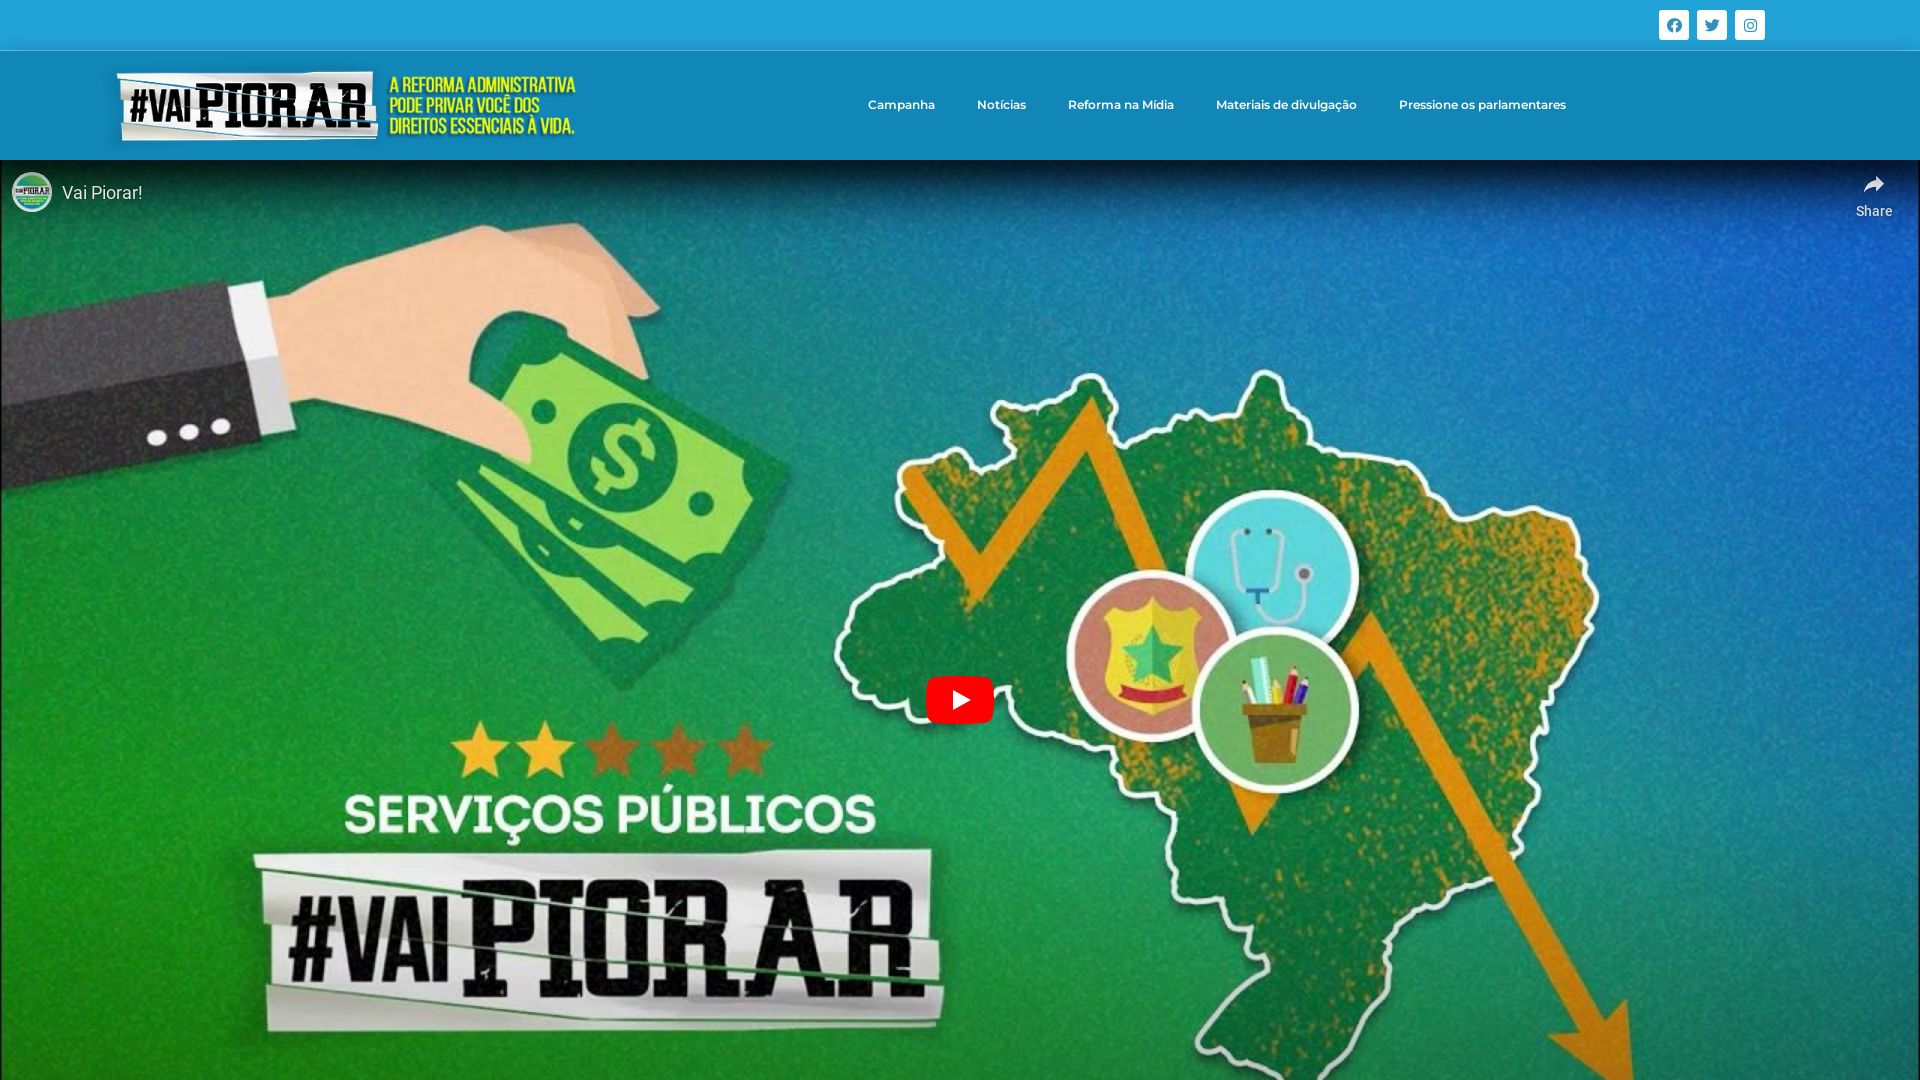 Website status vaipiorar.com.br is   ONLINE